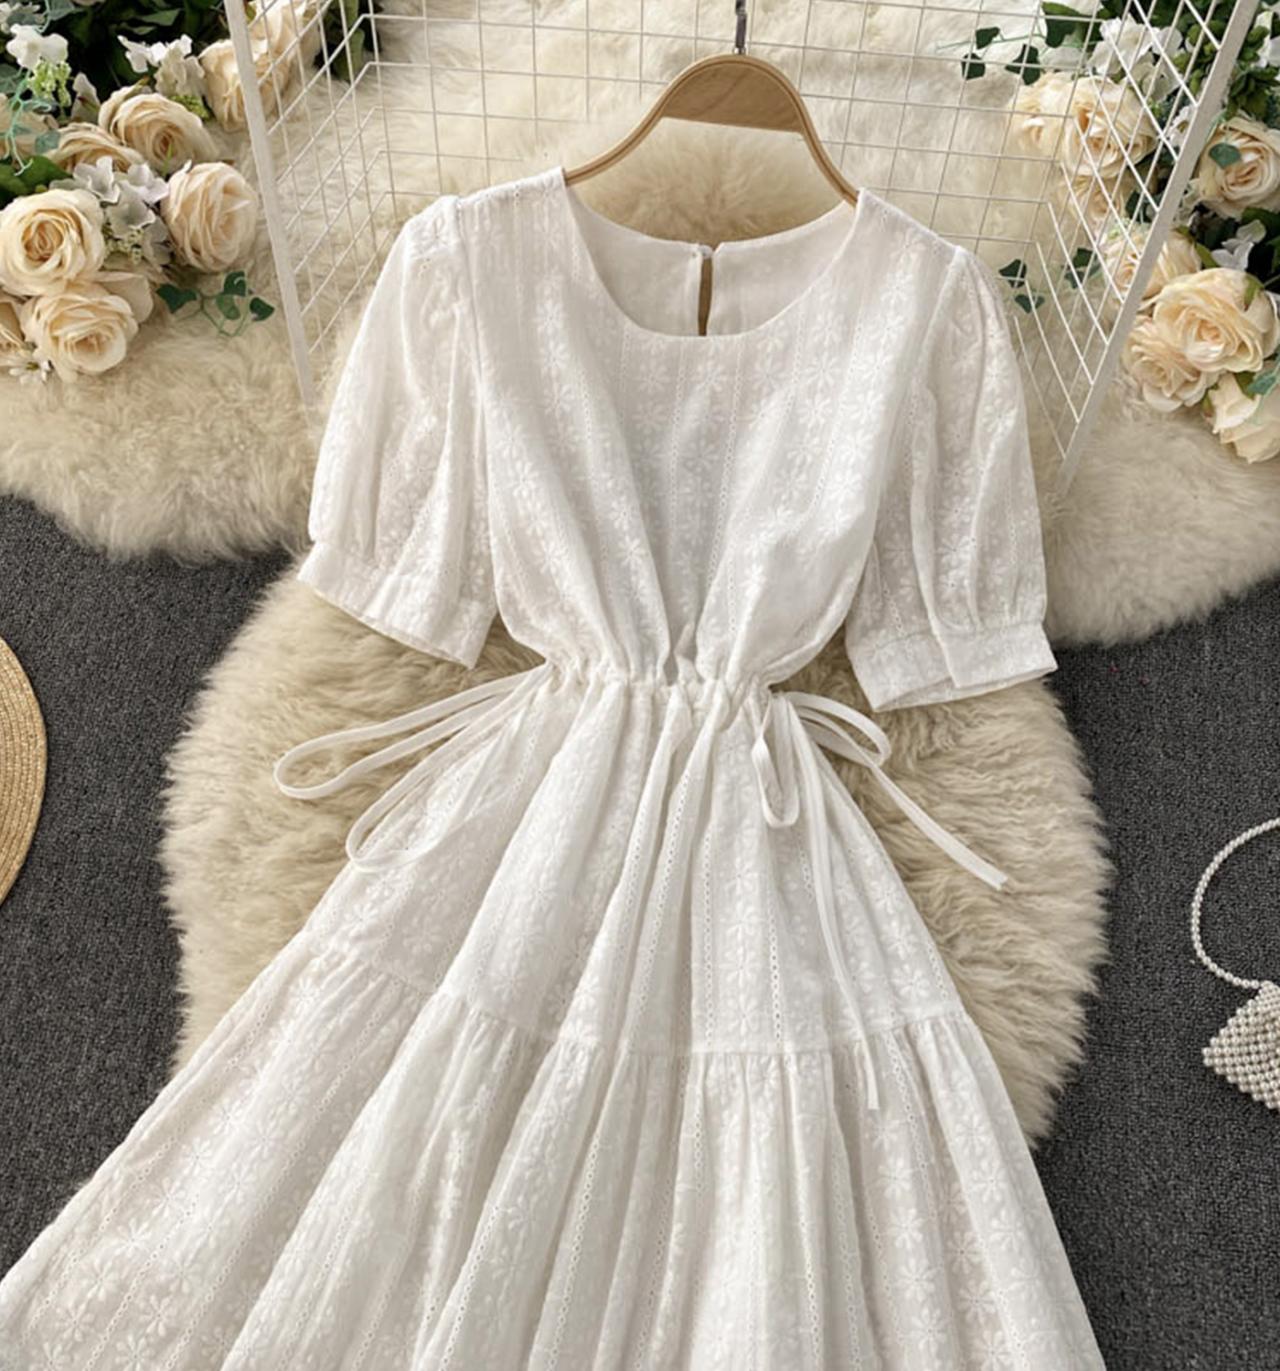 Süßes A-Linie Rundhals kurzes Kleid Modekleid 711